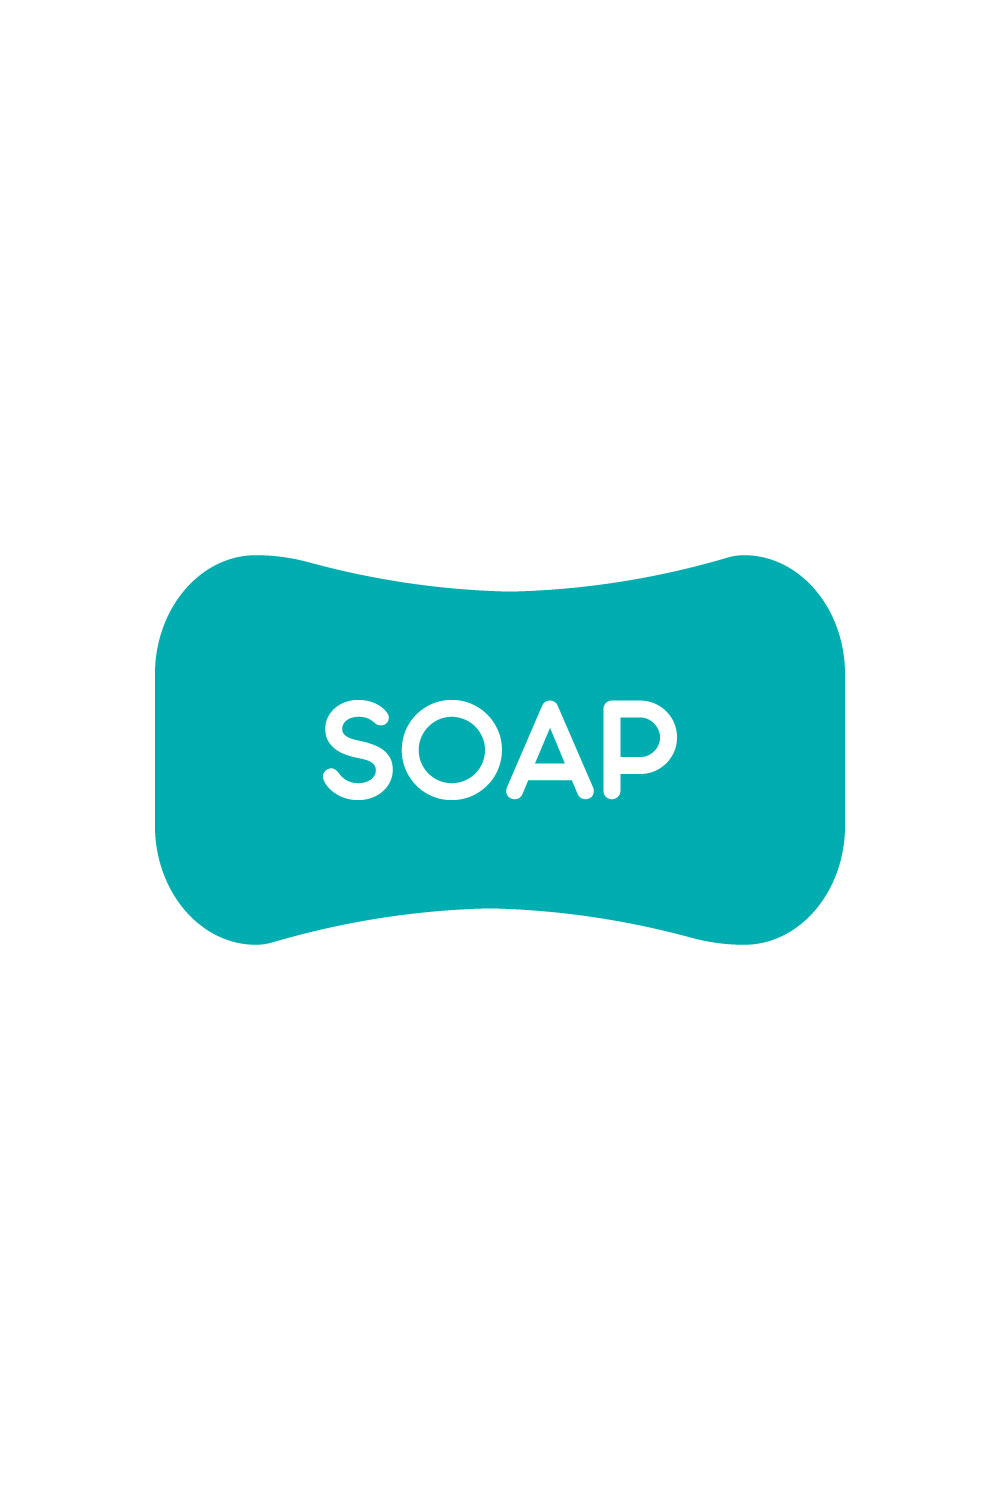 Creative soap logo design with original shape, Vector design template pinterest preview image.